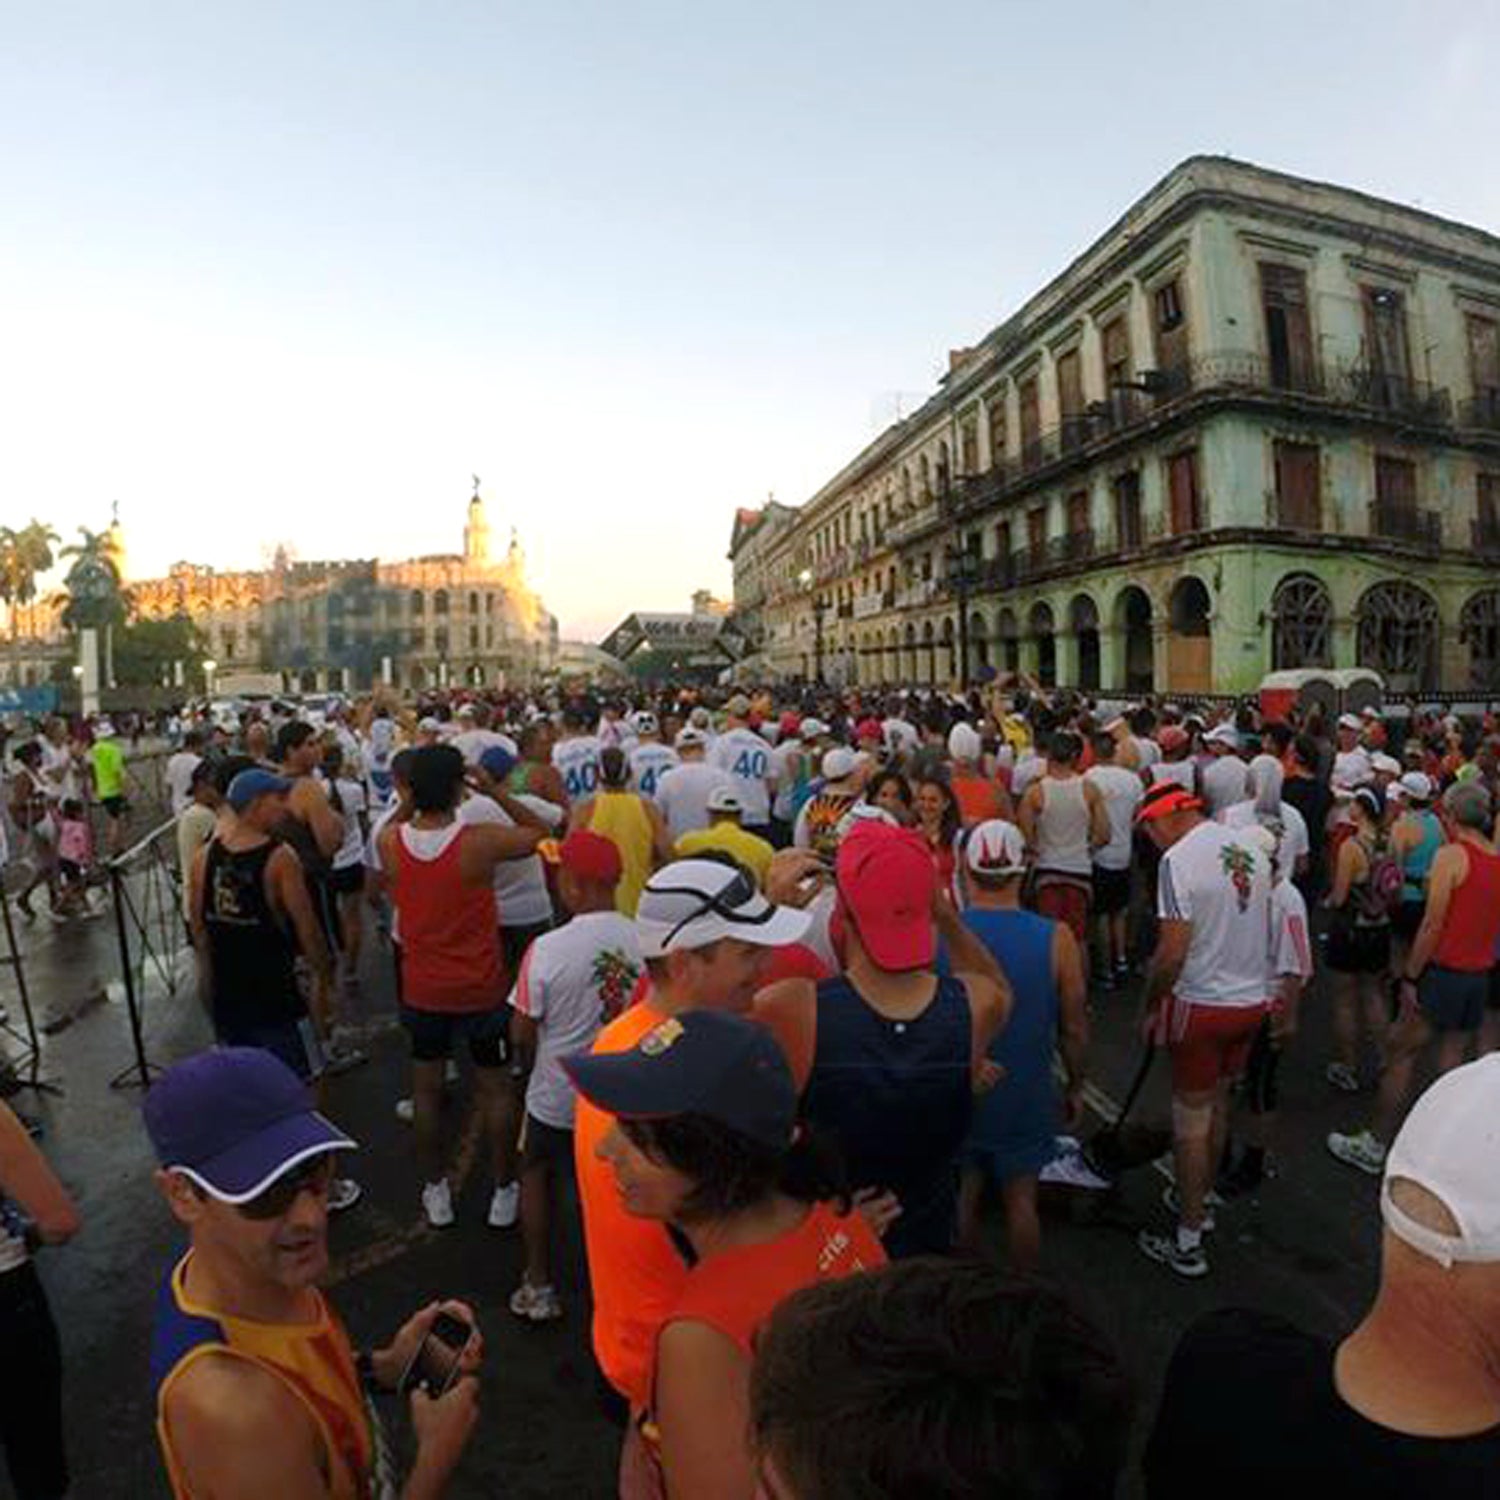 Americans Can Now Legally Run Cuba Marathon